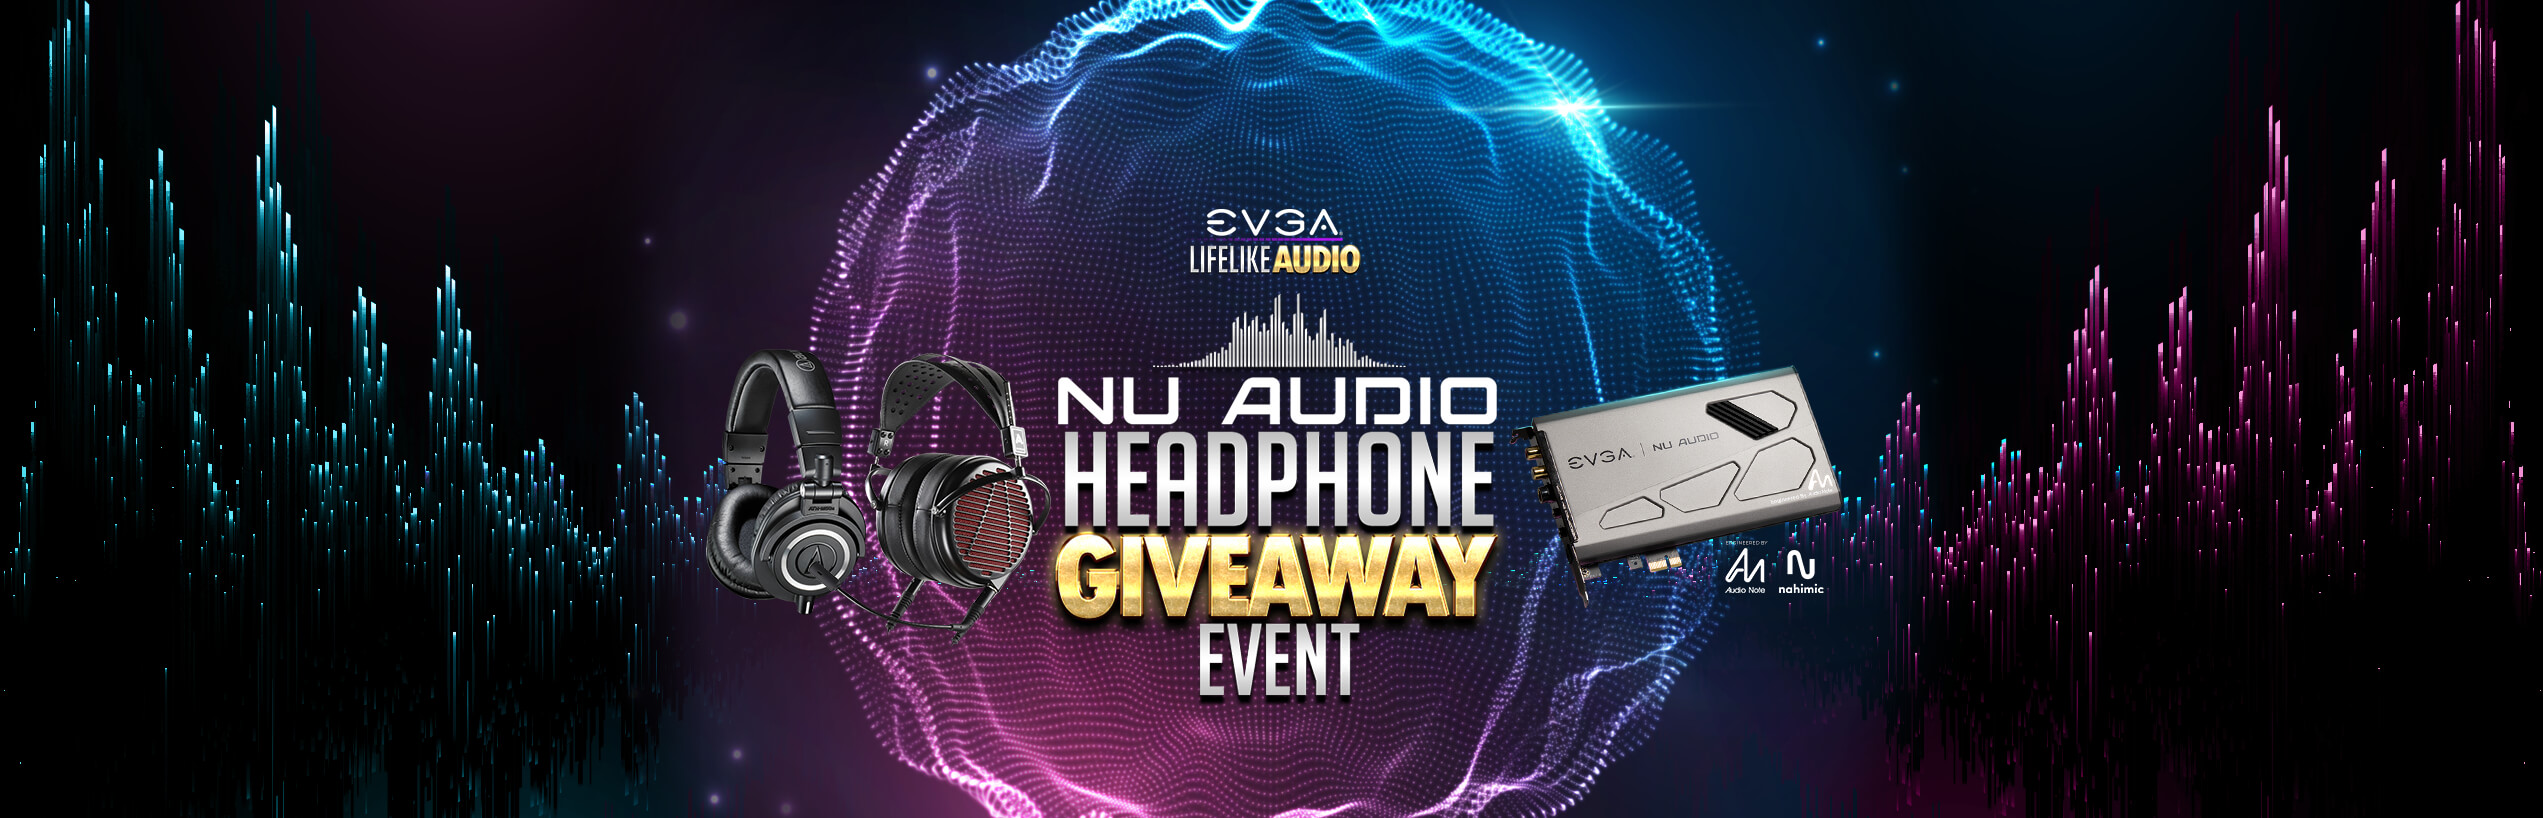 NU Audio Headphone Giveaway Event